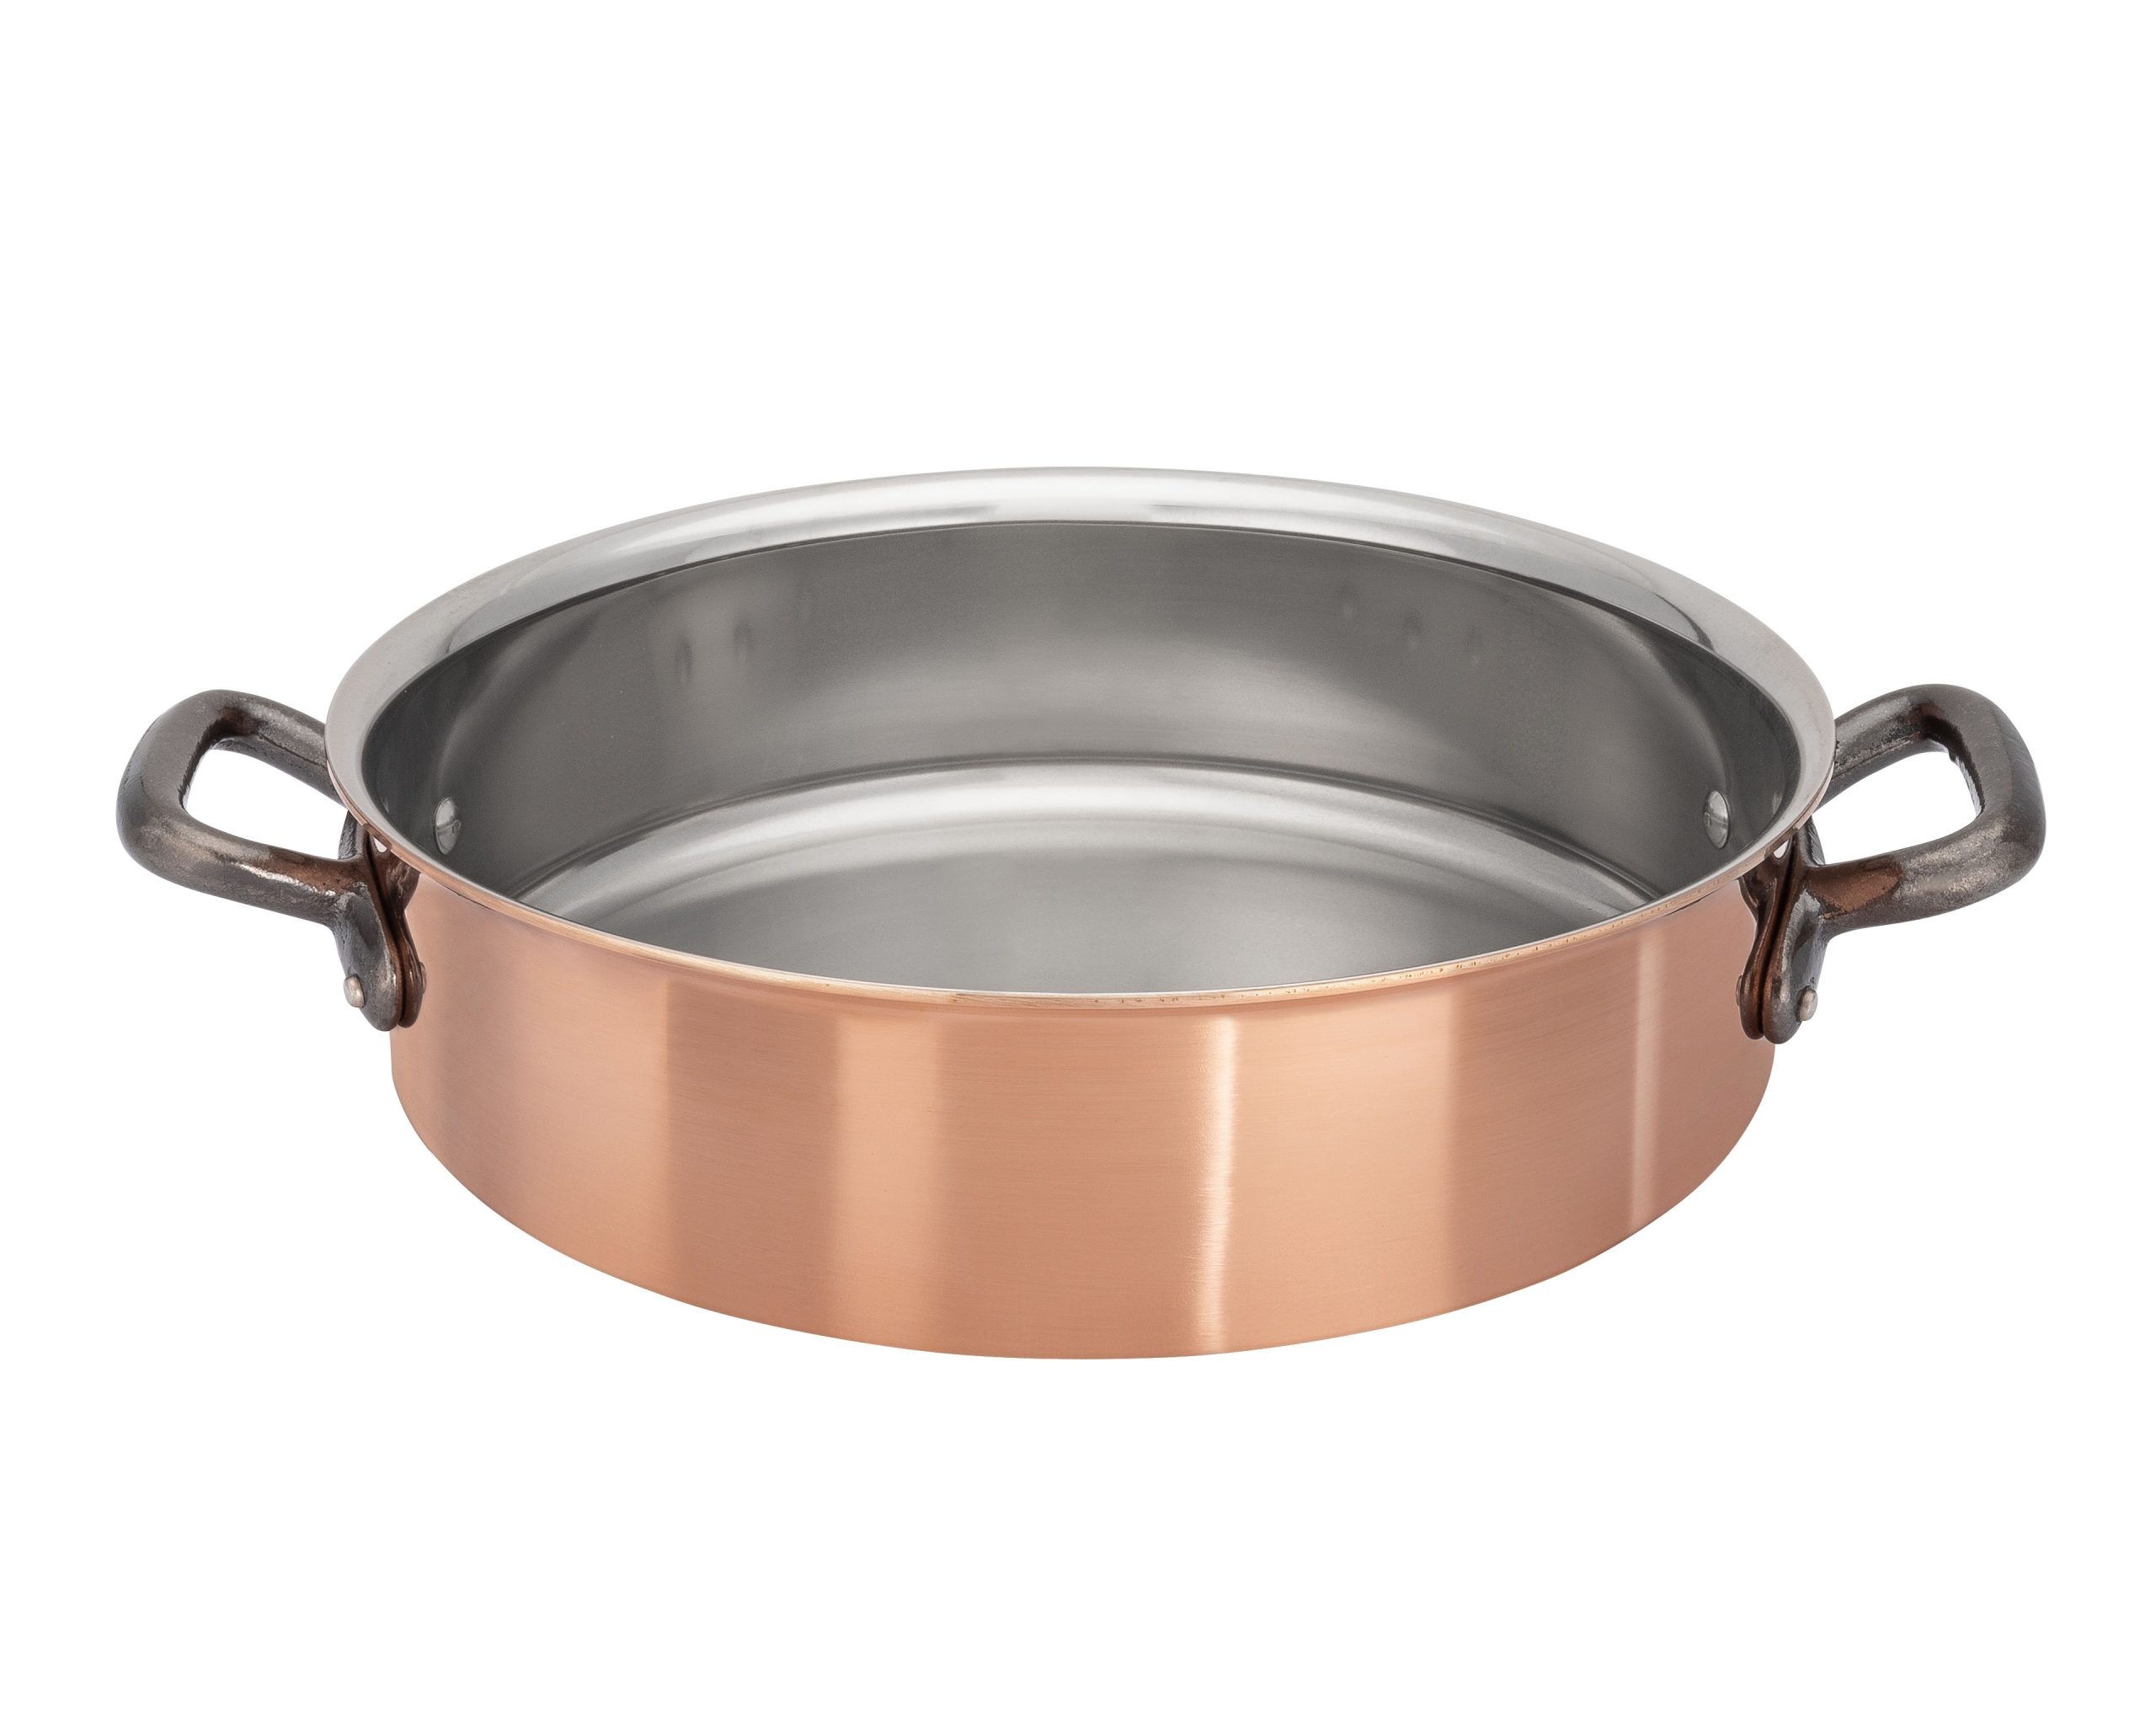 https://www.pastrychefsboutique.com/23529/bourgeat-374024-matfer-bourgeat-copper-saute-pan-brazier-without-lid-9-1-2-bourgeat-copper-cookware.jpg